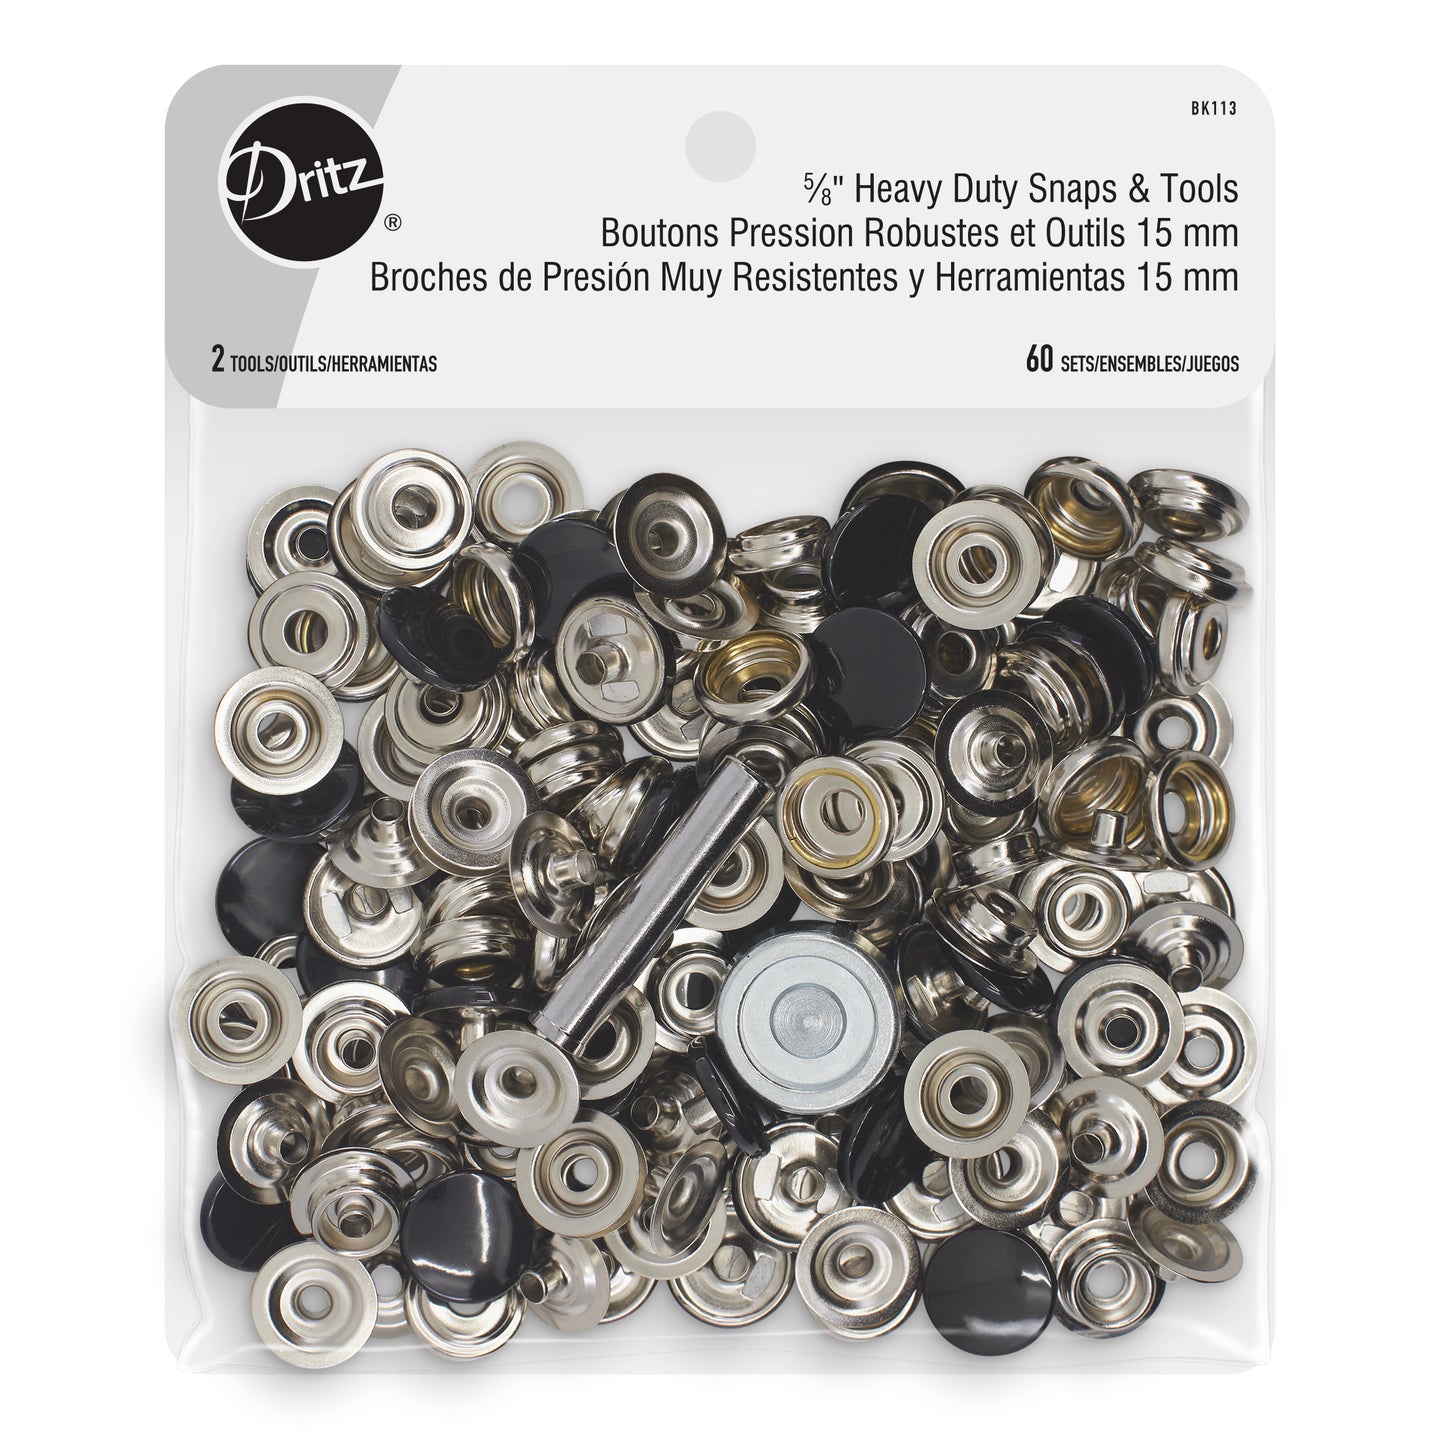 Dritz 5∕8 inch Heavy Duty Snaps & Tools, 60 Sets, Nickel